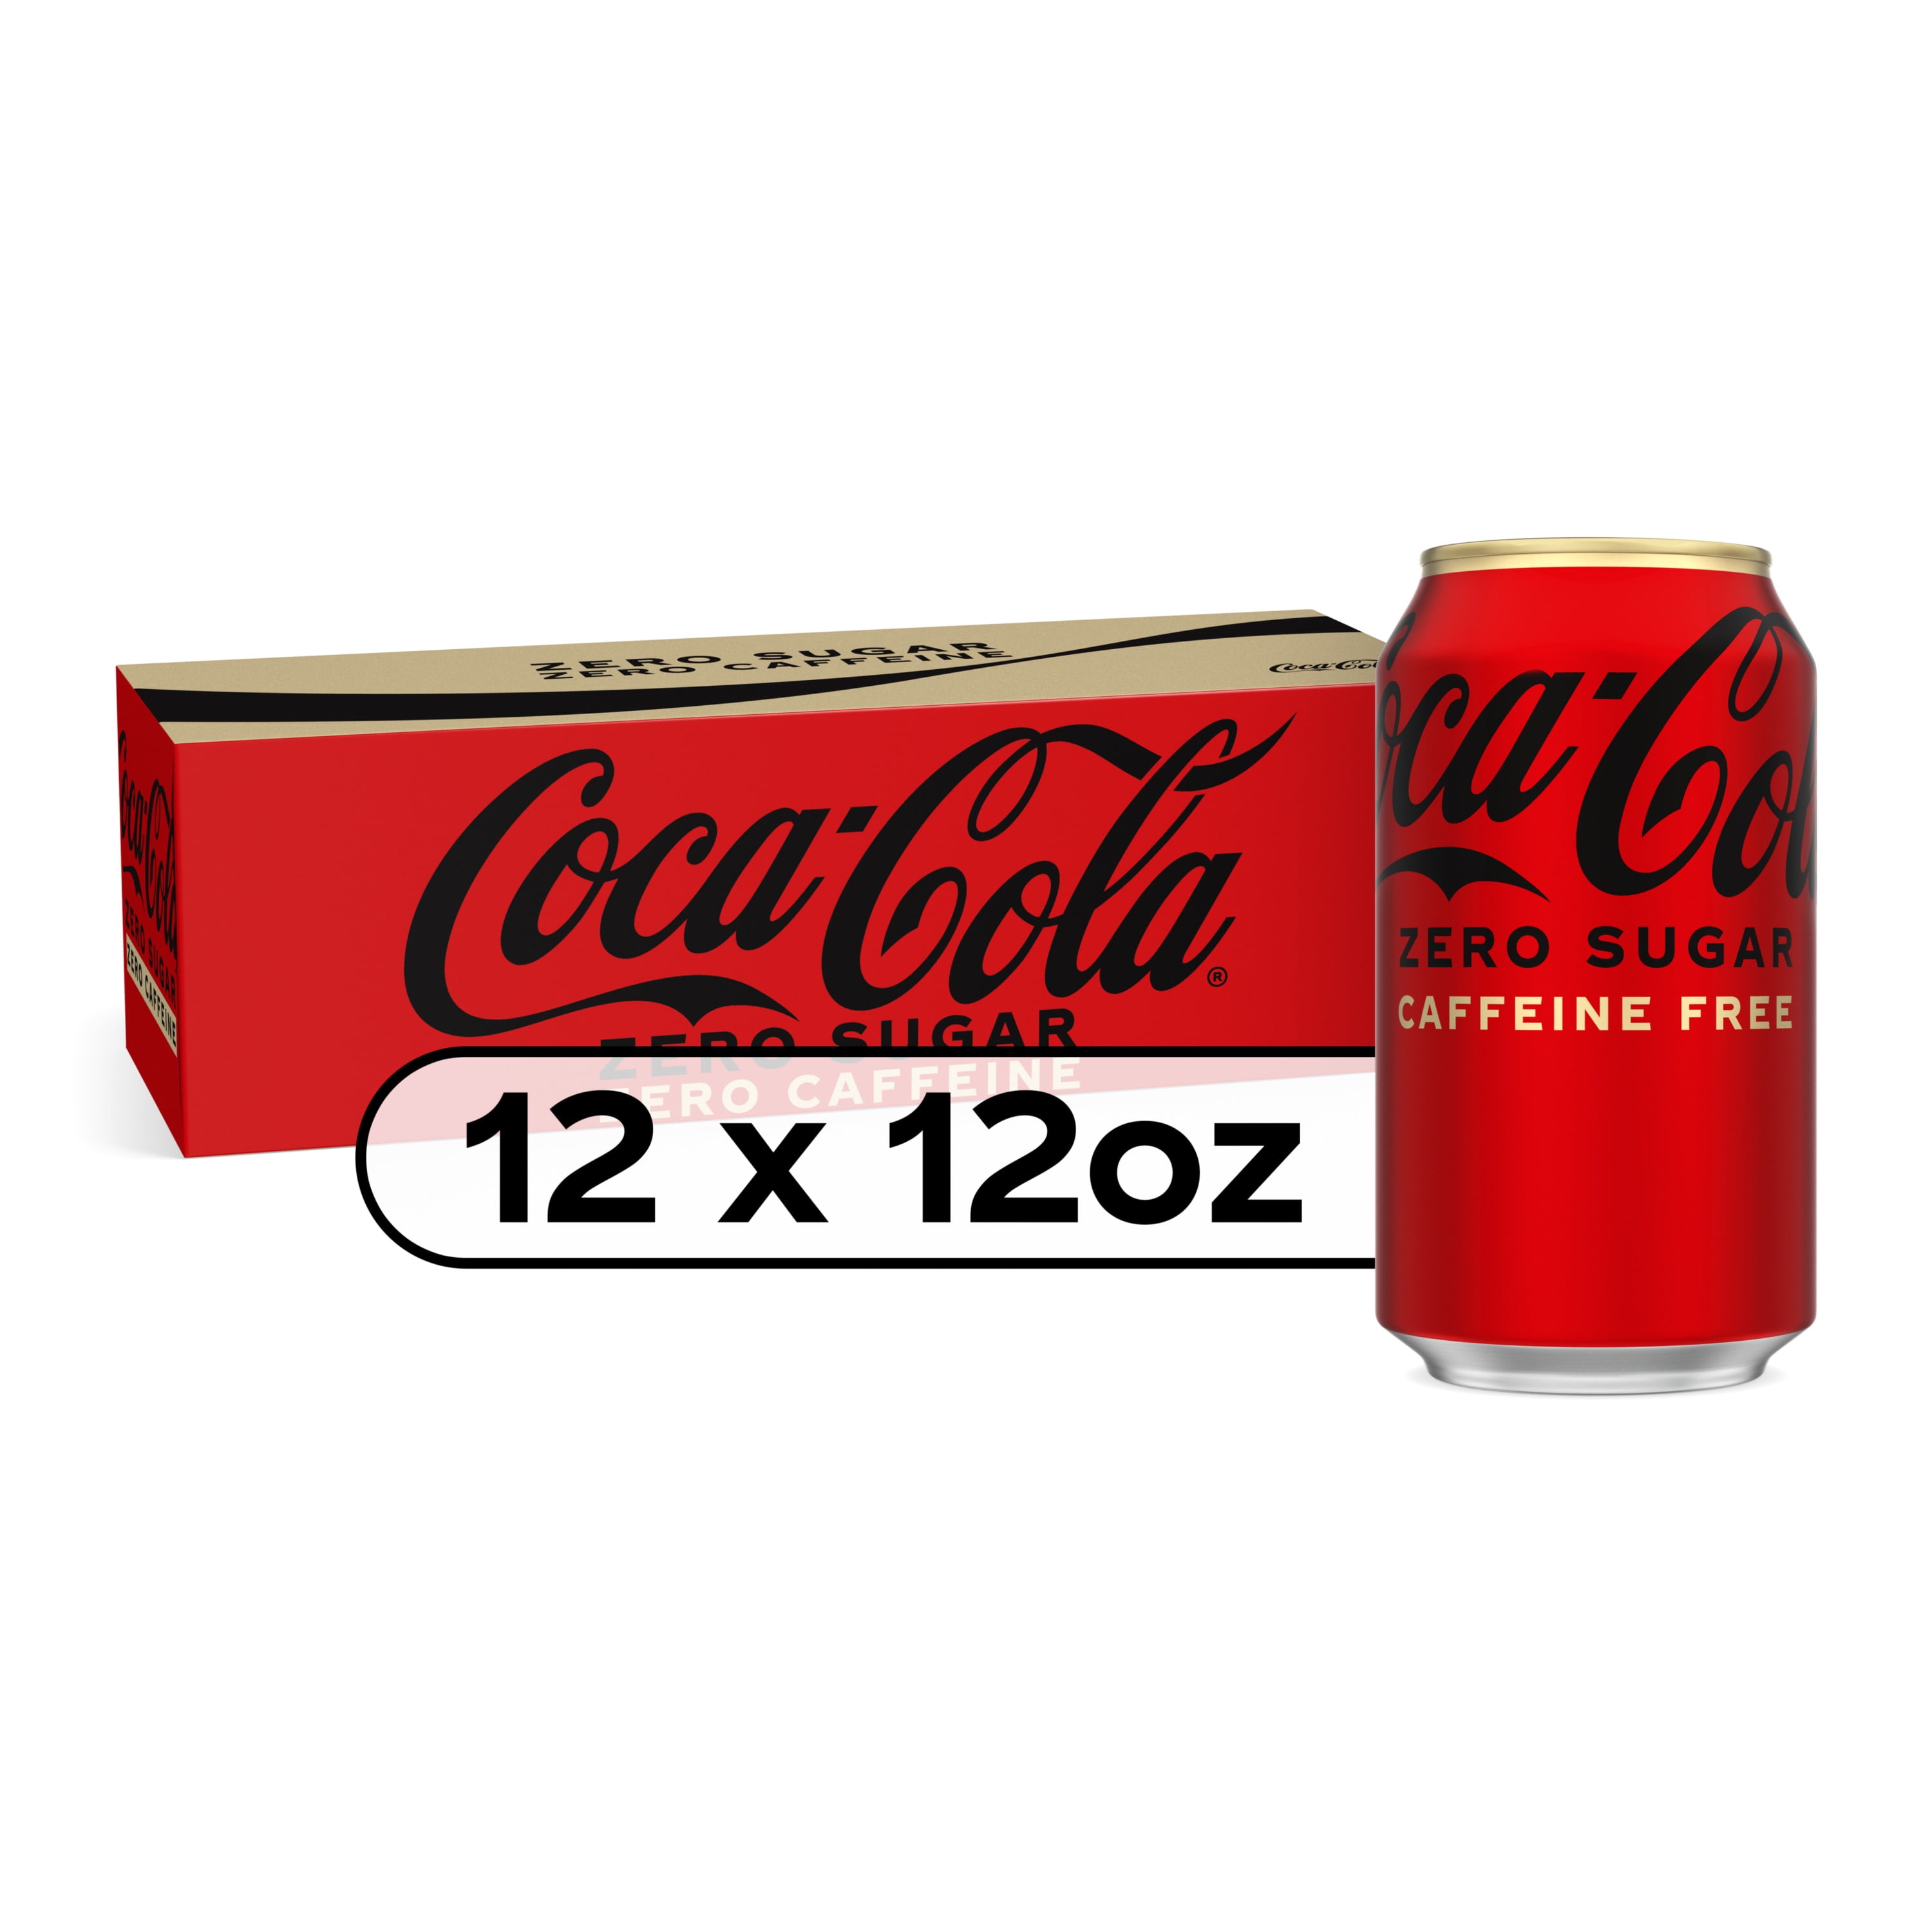 Coca-Cola Zero Sugar, Caffeine Free Soda Pop, 12 fl oz, 12 Pack Cans 